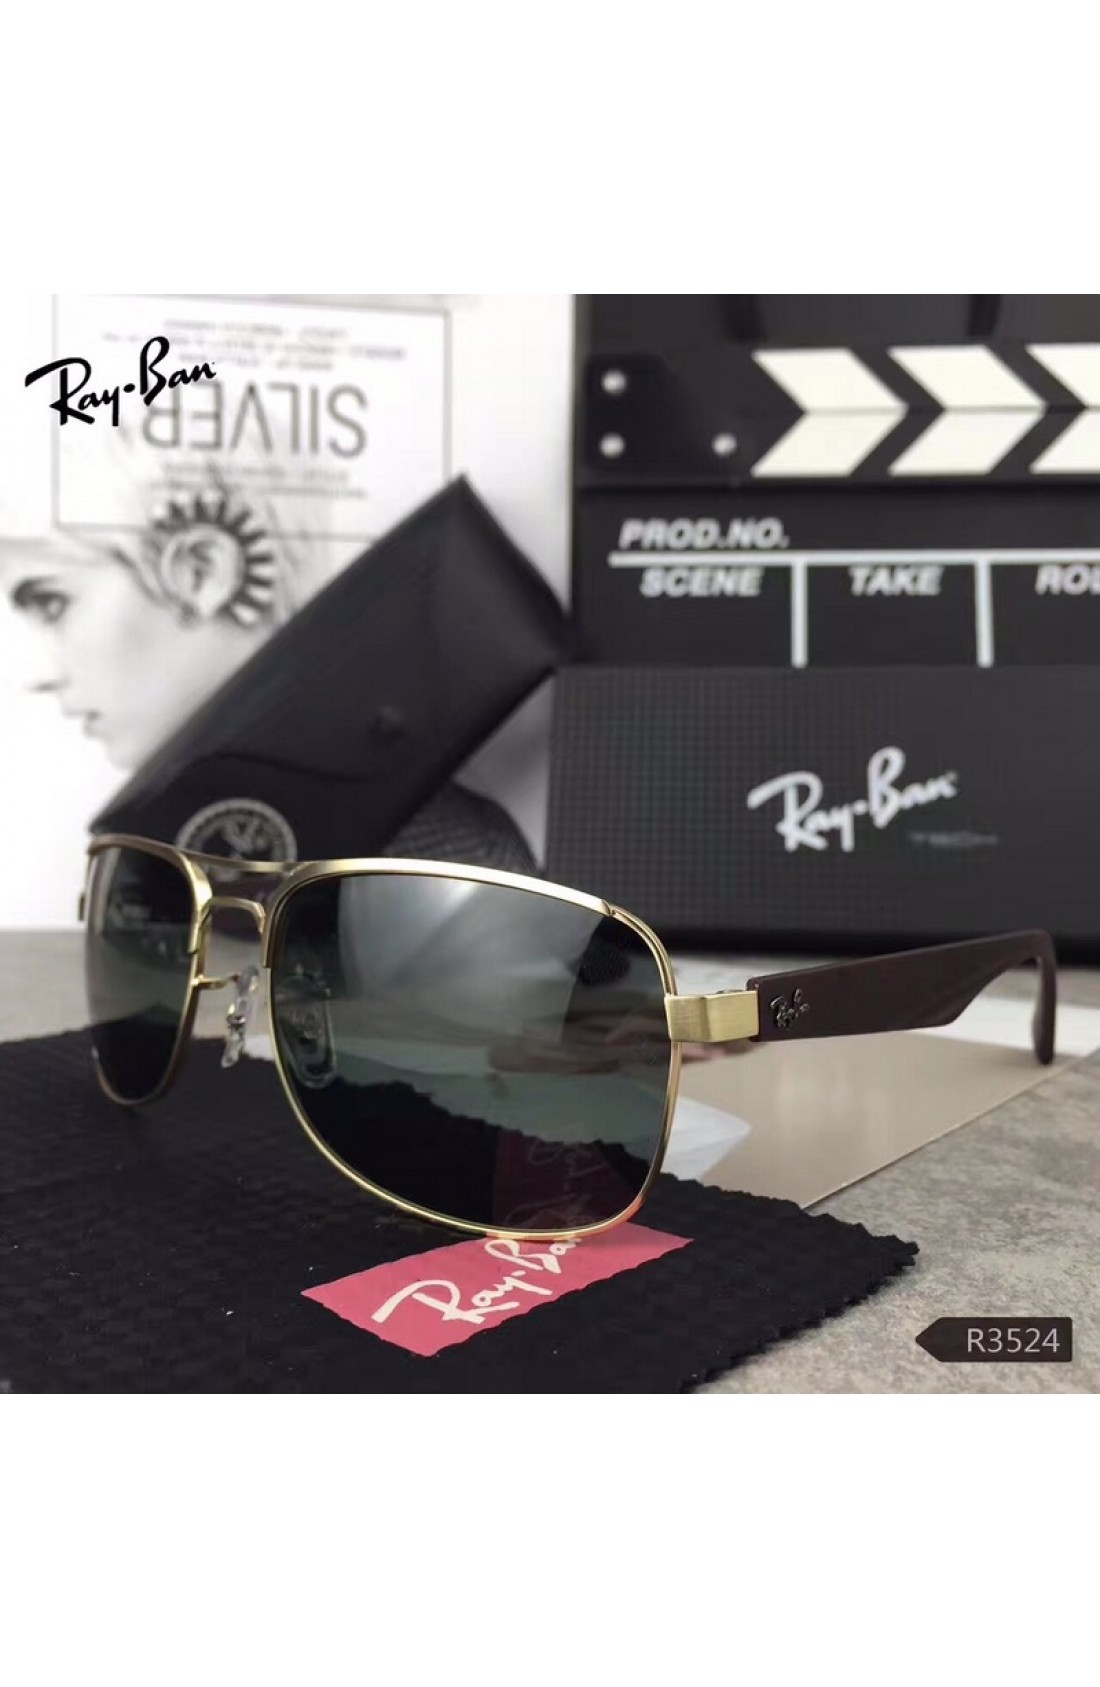 Ray Ban Polarized Sunglasses Black Gold